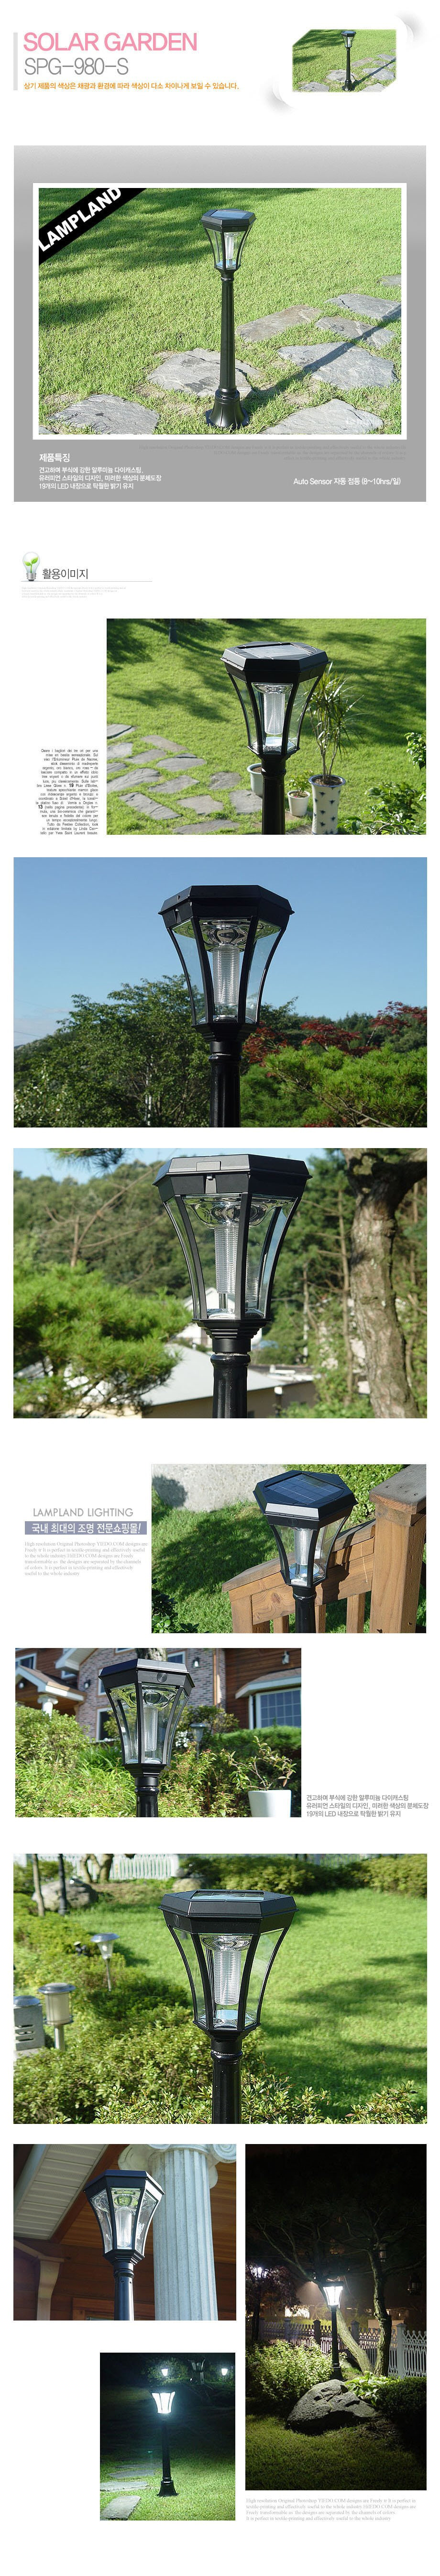 [LED]SPG-980-S 태양광 정원등